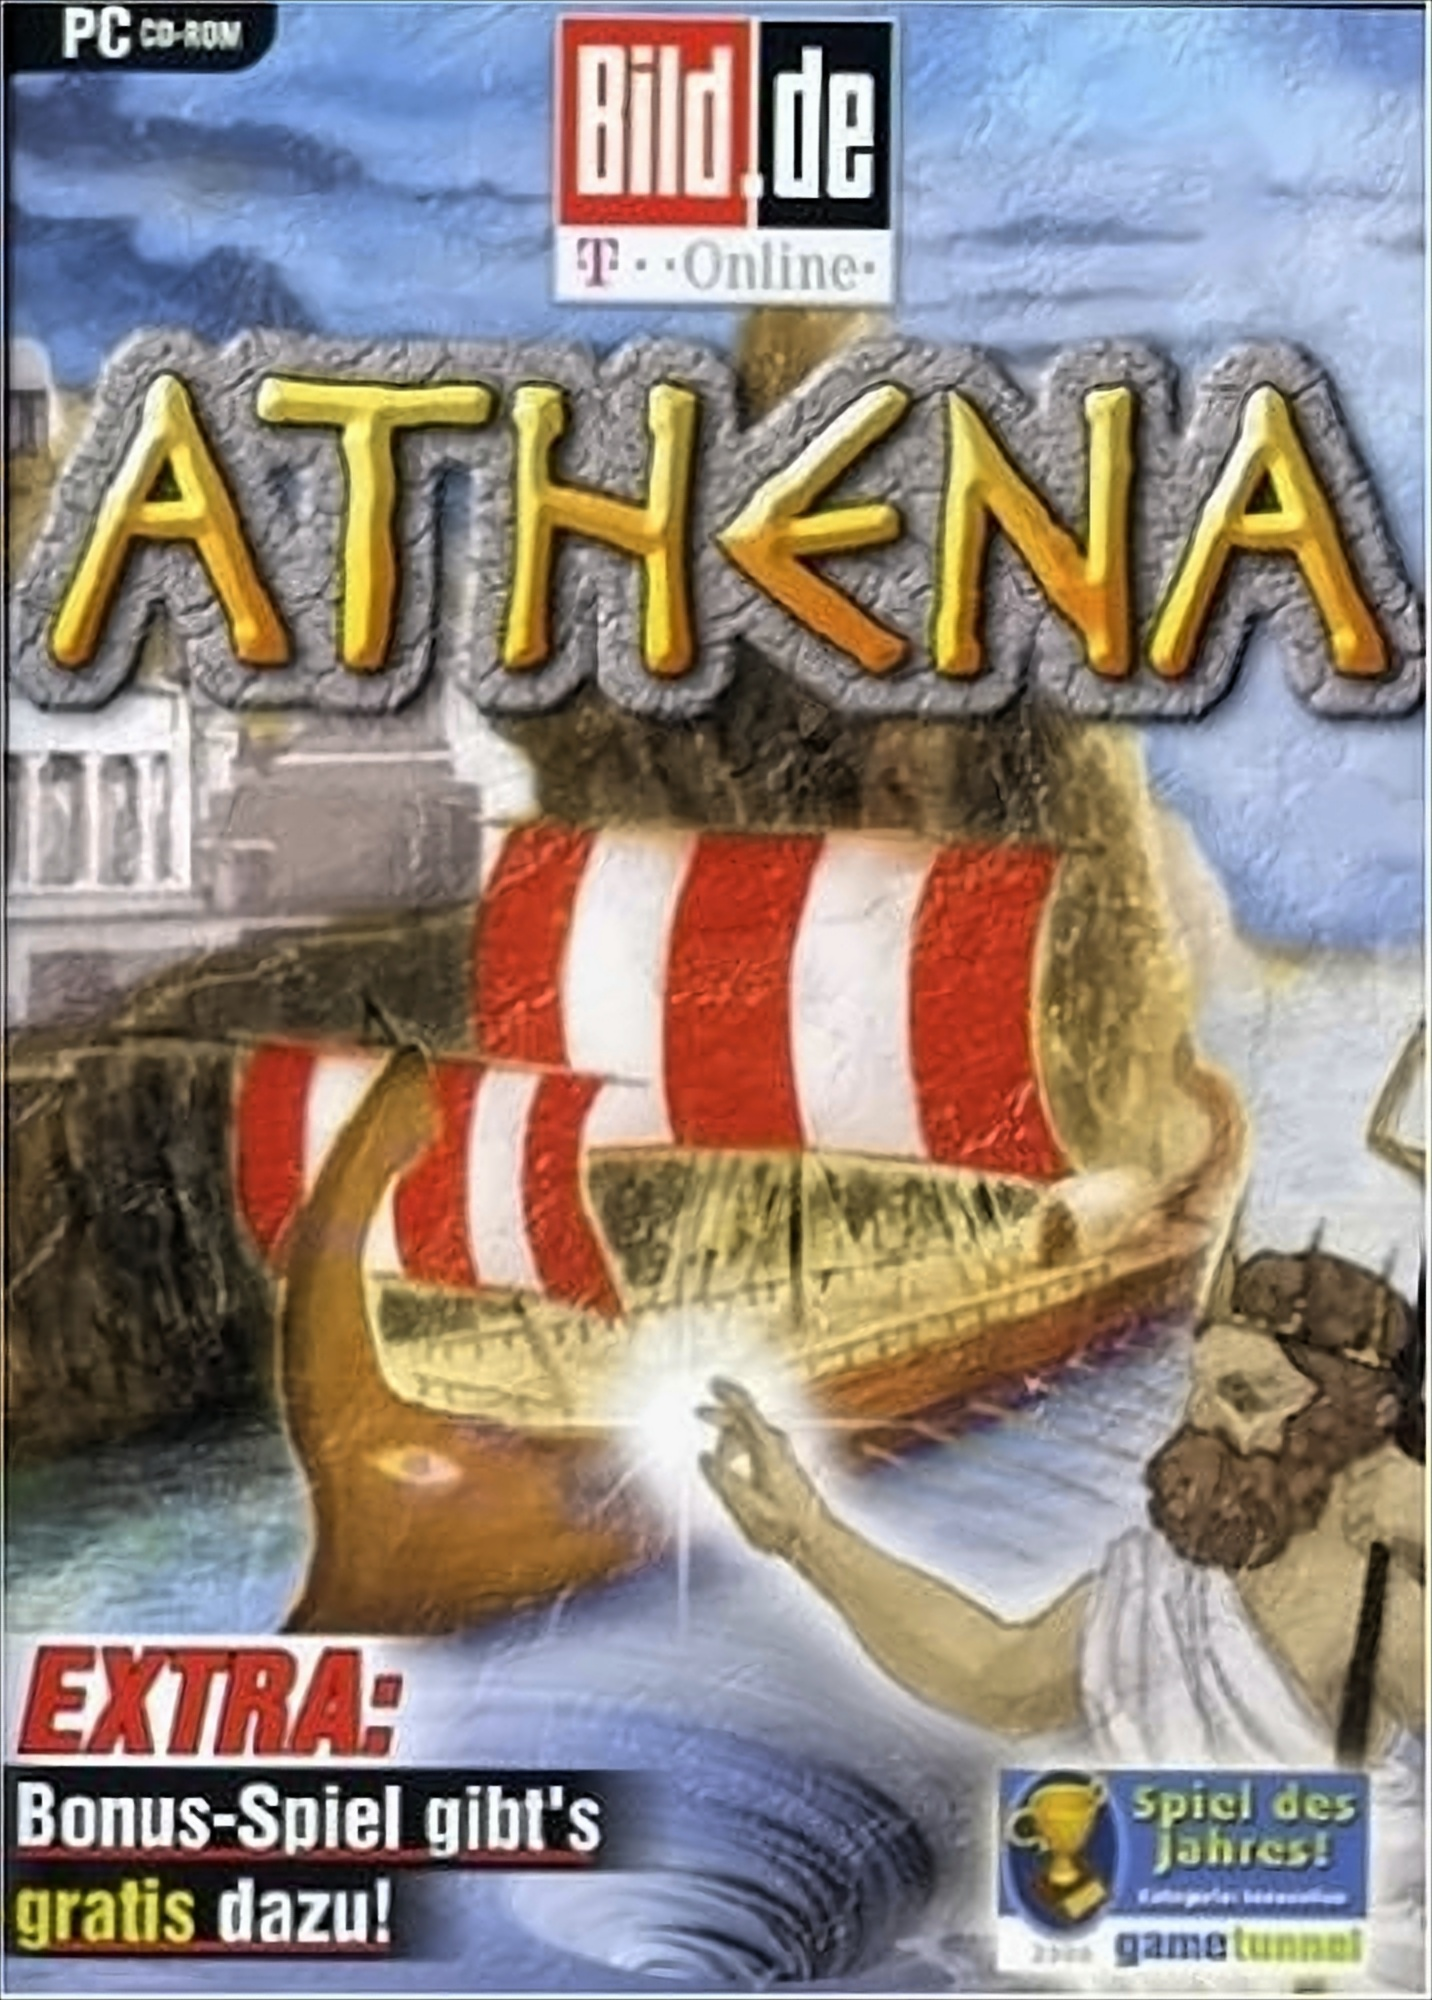 Athena - [PC] Bild.de